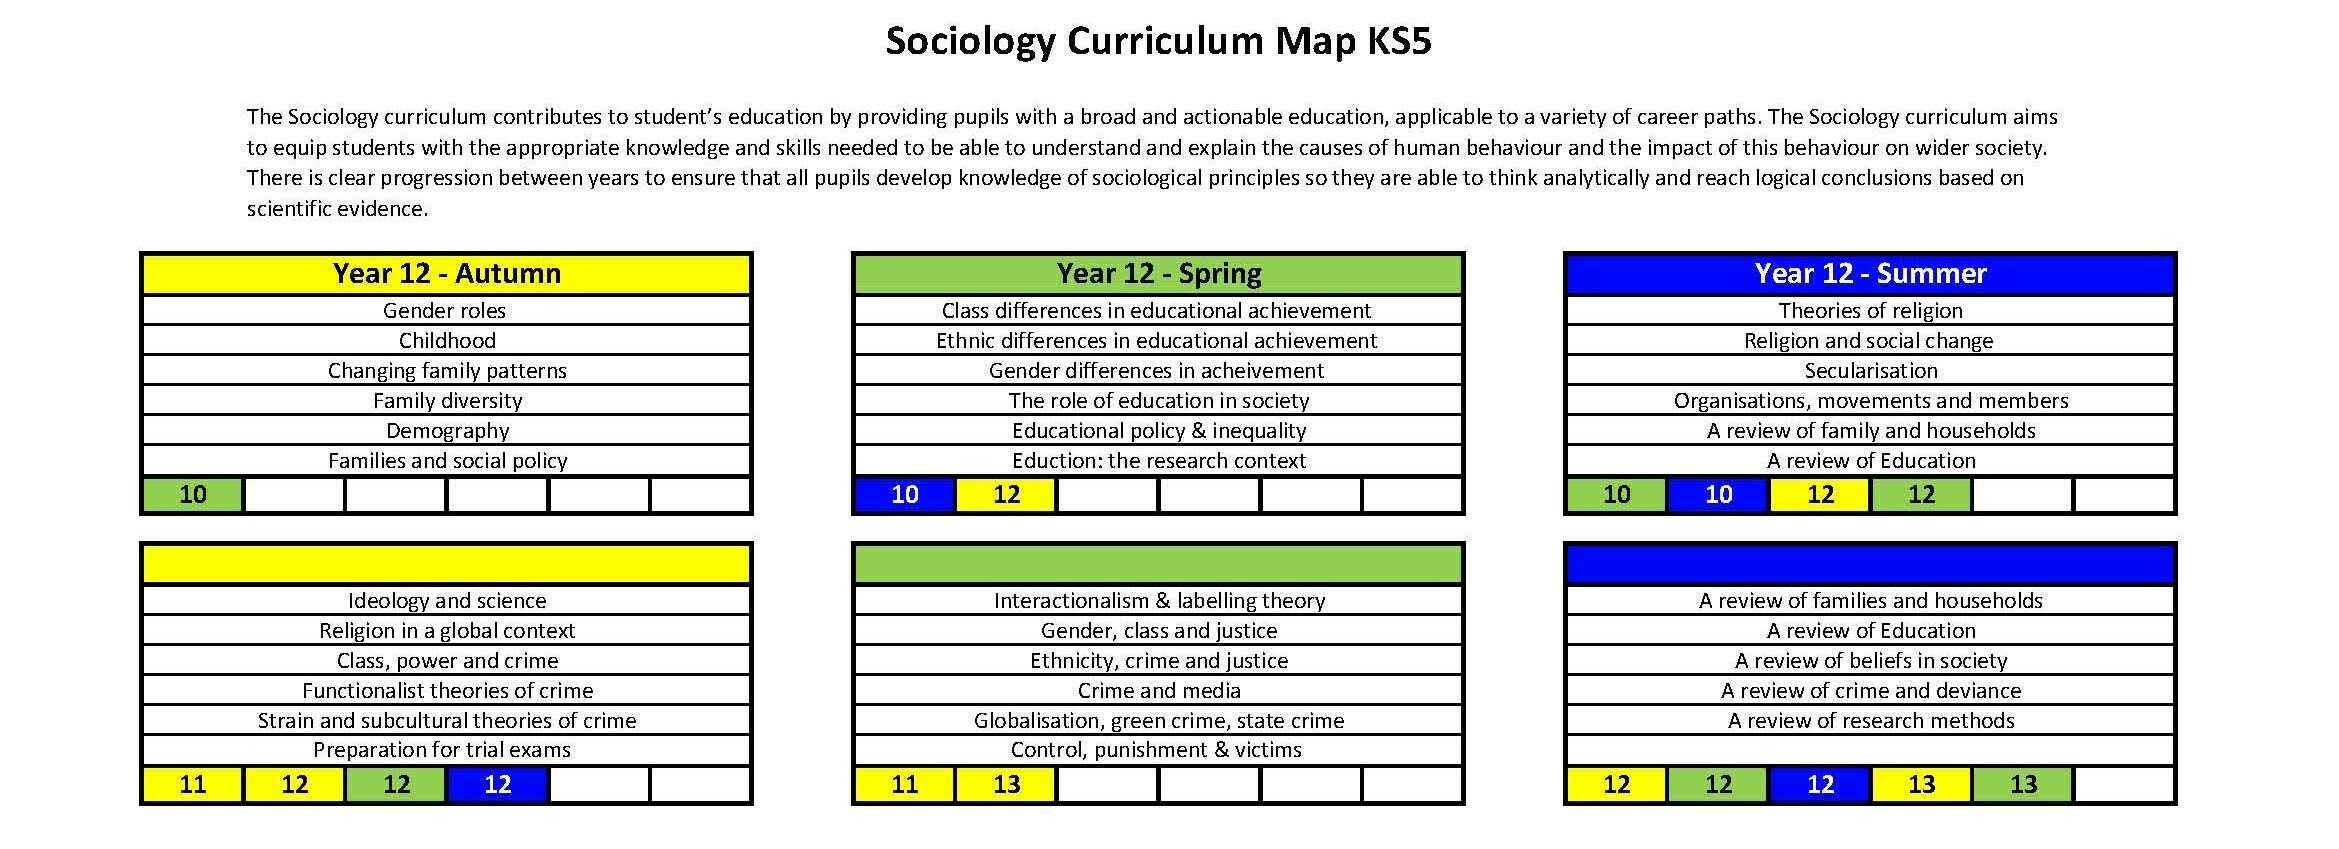 Ks5 curriculum map sociology